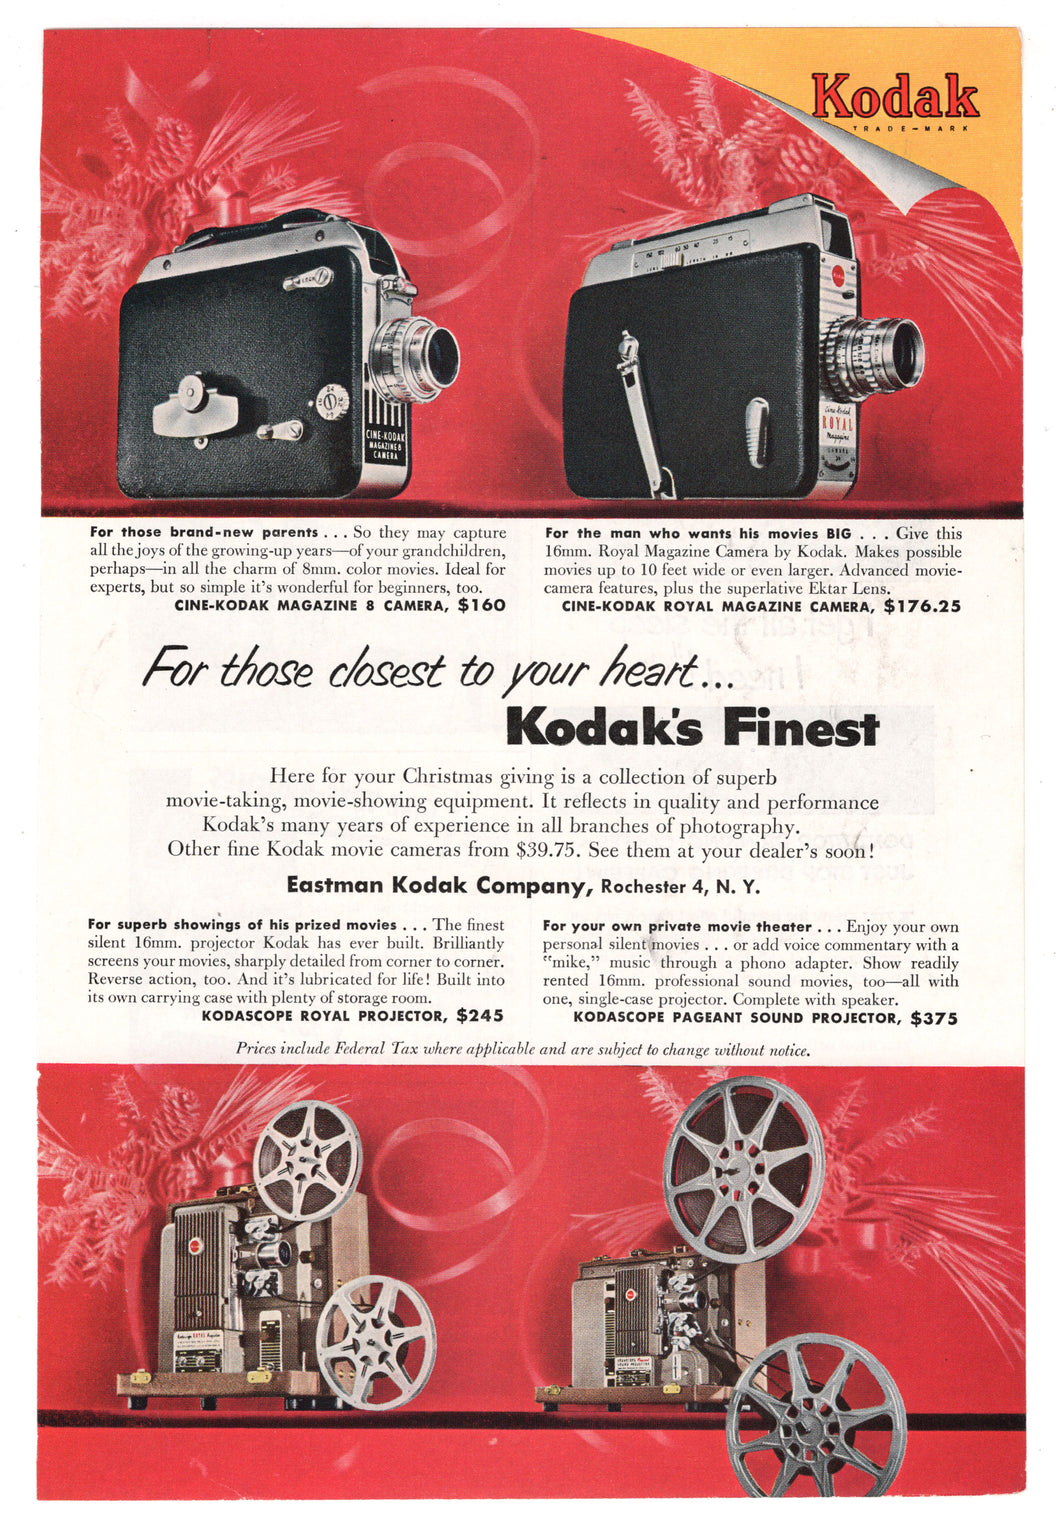 Kodak Movie Cameras & Projectors - Vintage Ad (Kodak's Finest) - # 565- 1960's